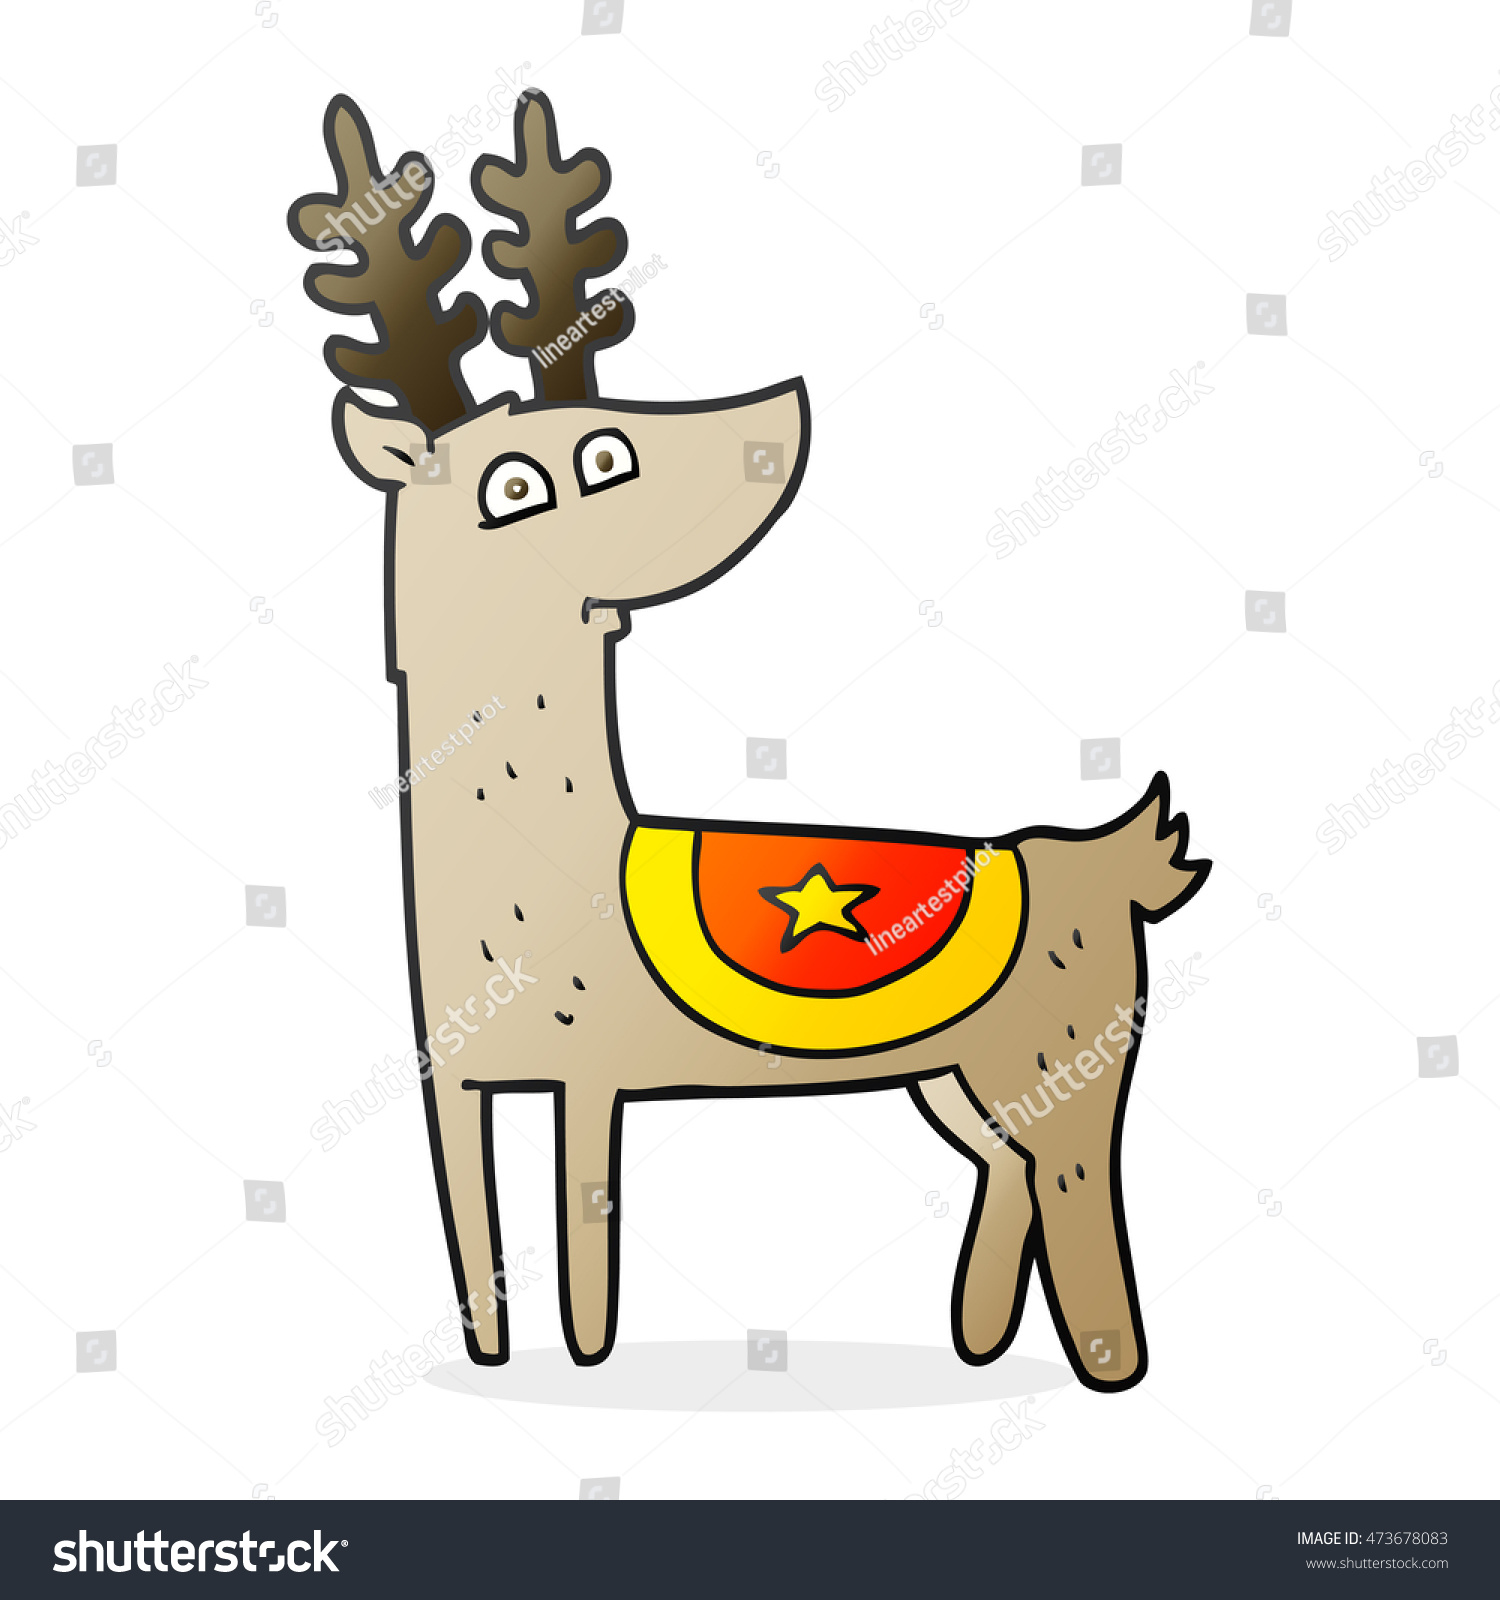 Freehand Drawn Cartoon Reindeer Stock Photo 473678083 : Shutterstock